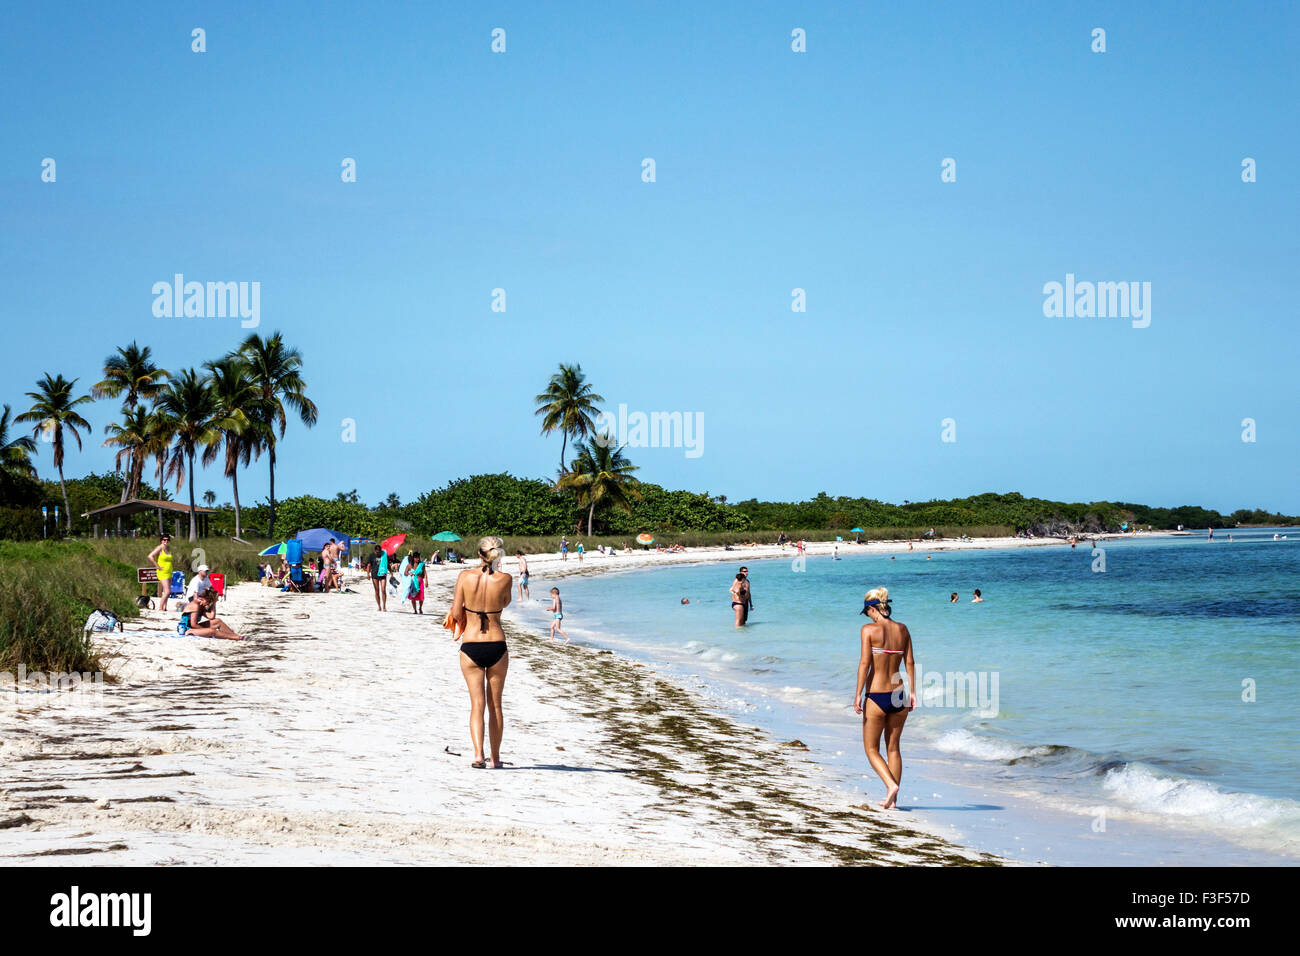 Florida Keys, Big Pine Key, Bahia Honda State Park, océan Atlantique, plage, bains de soleil, FL150508044 Banque D'Images